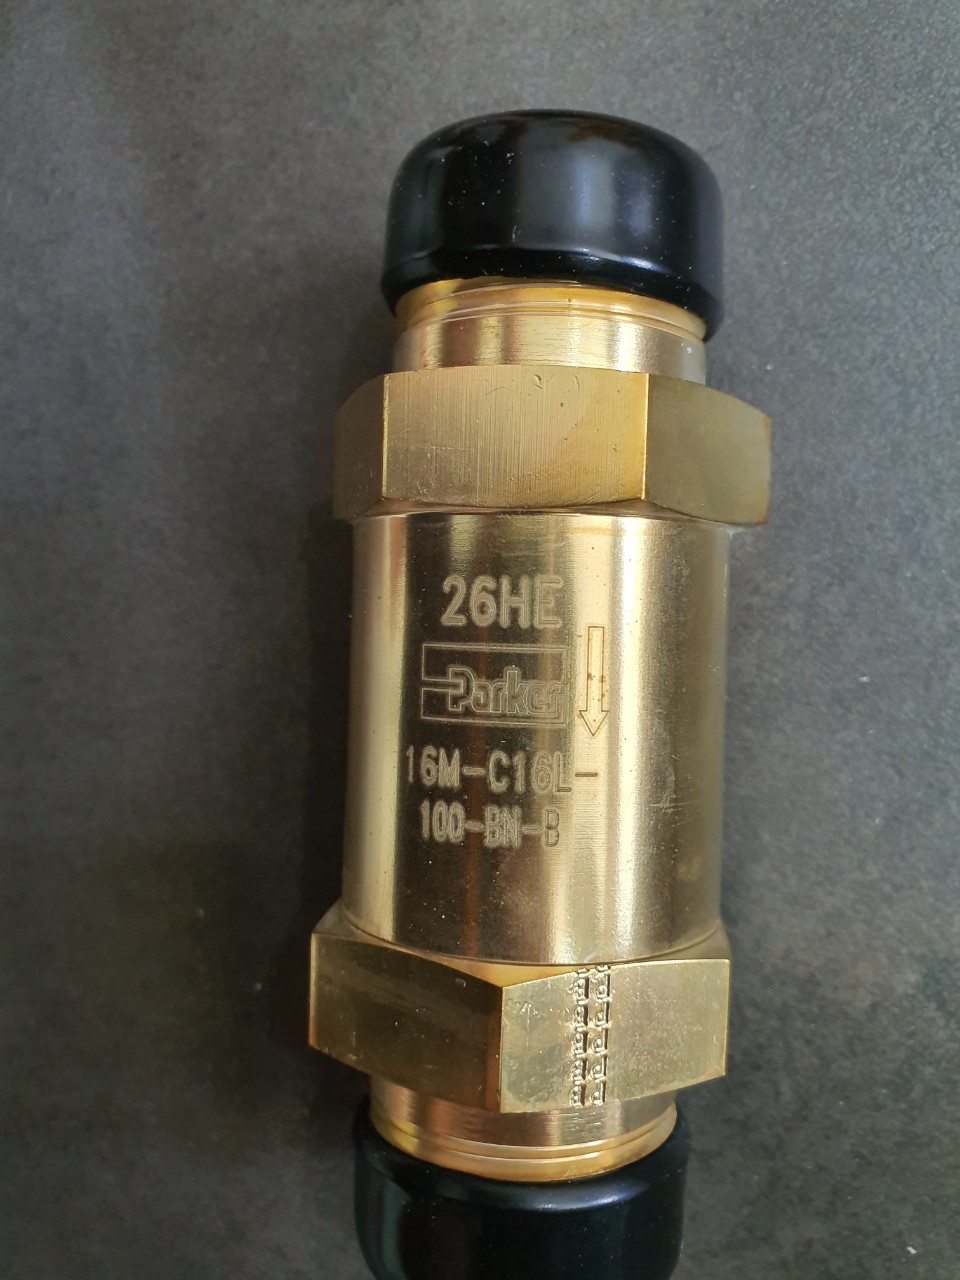 Check valve 16M-C16L-100-BN-B